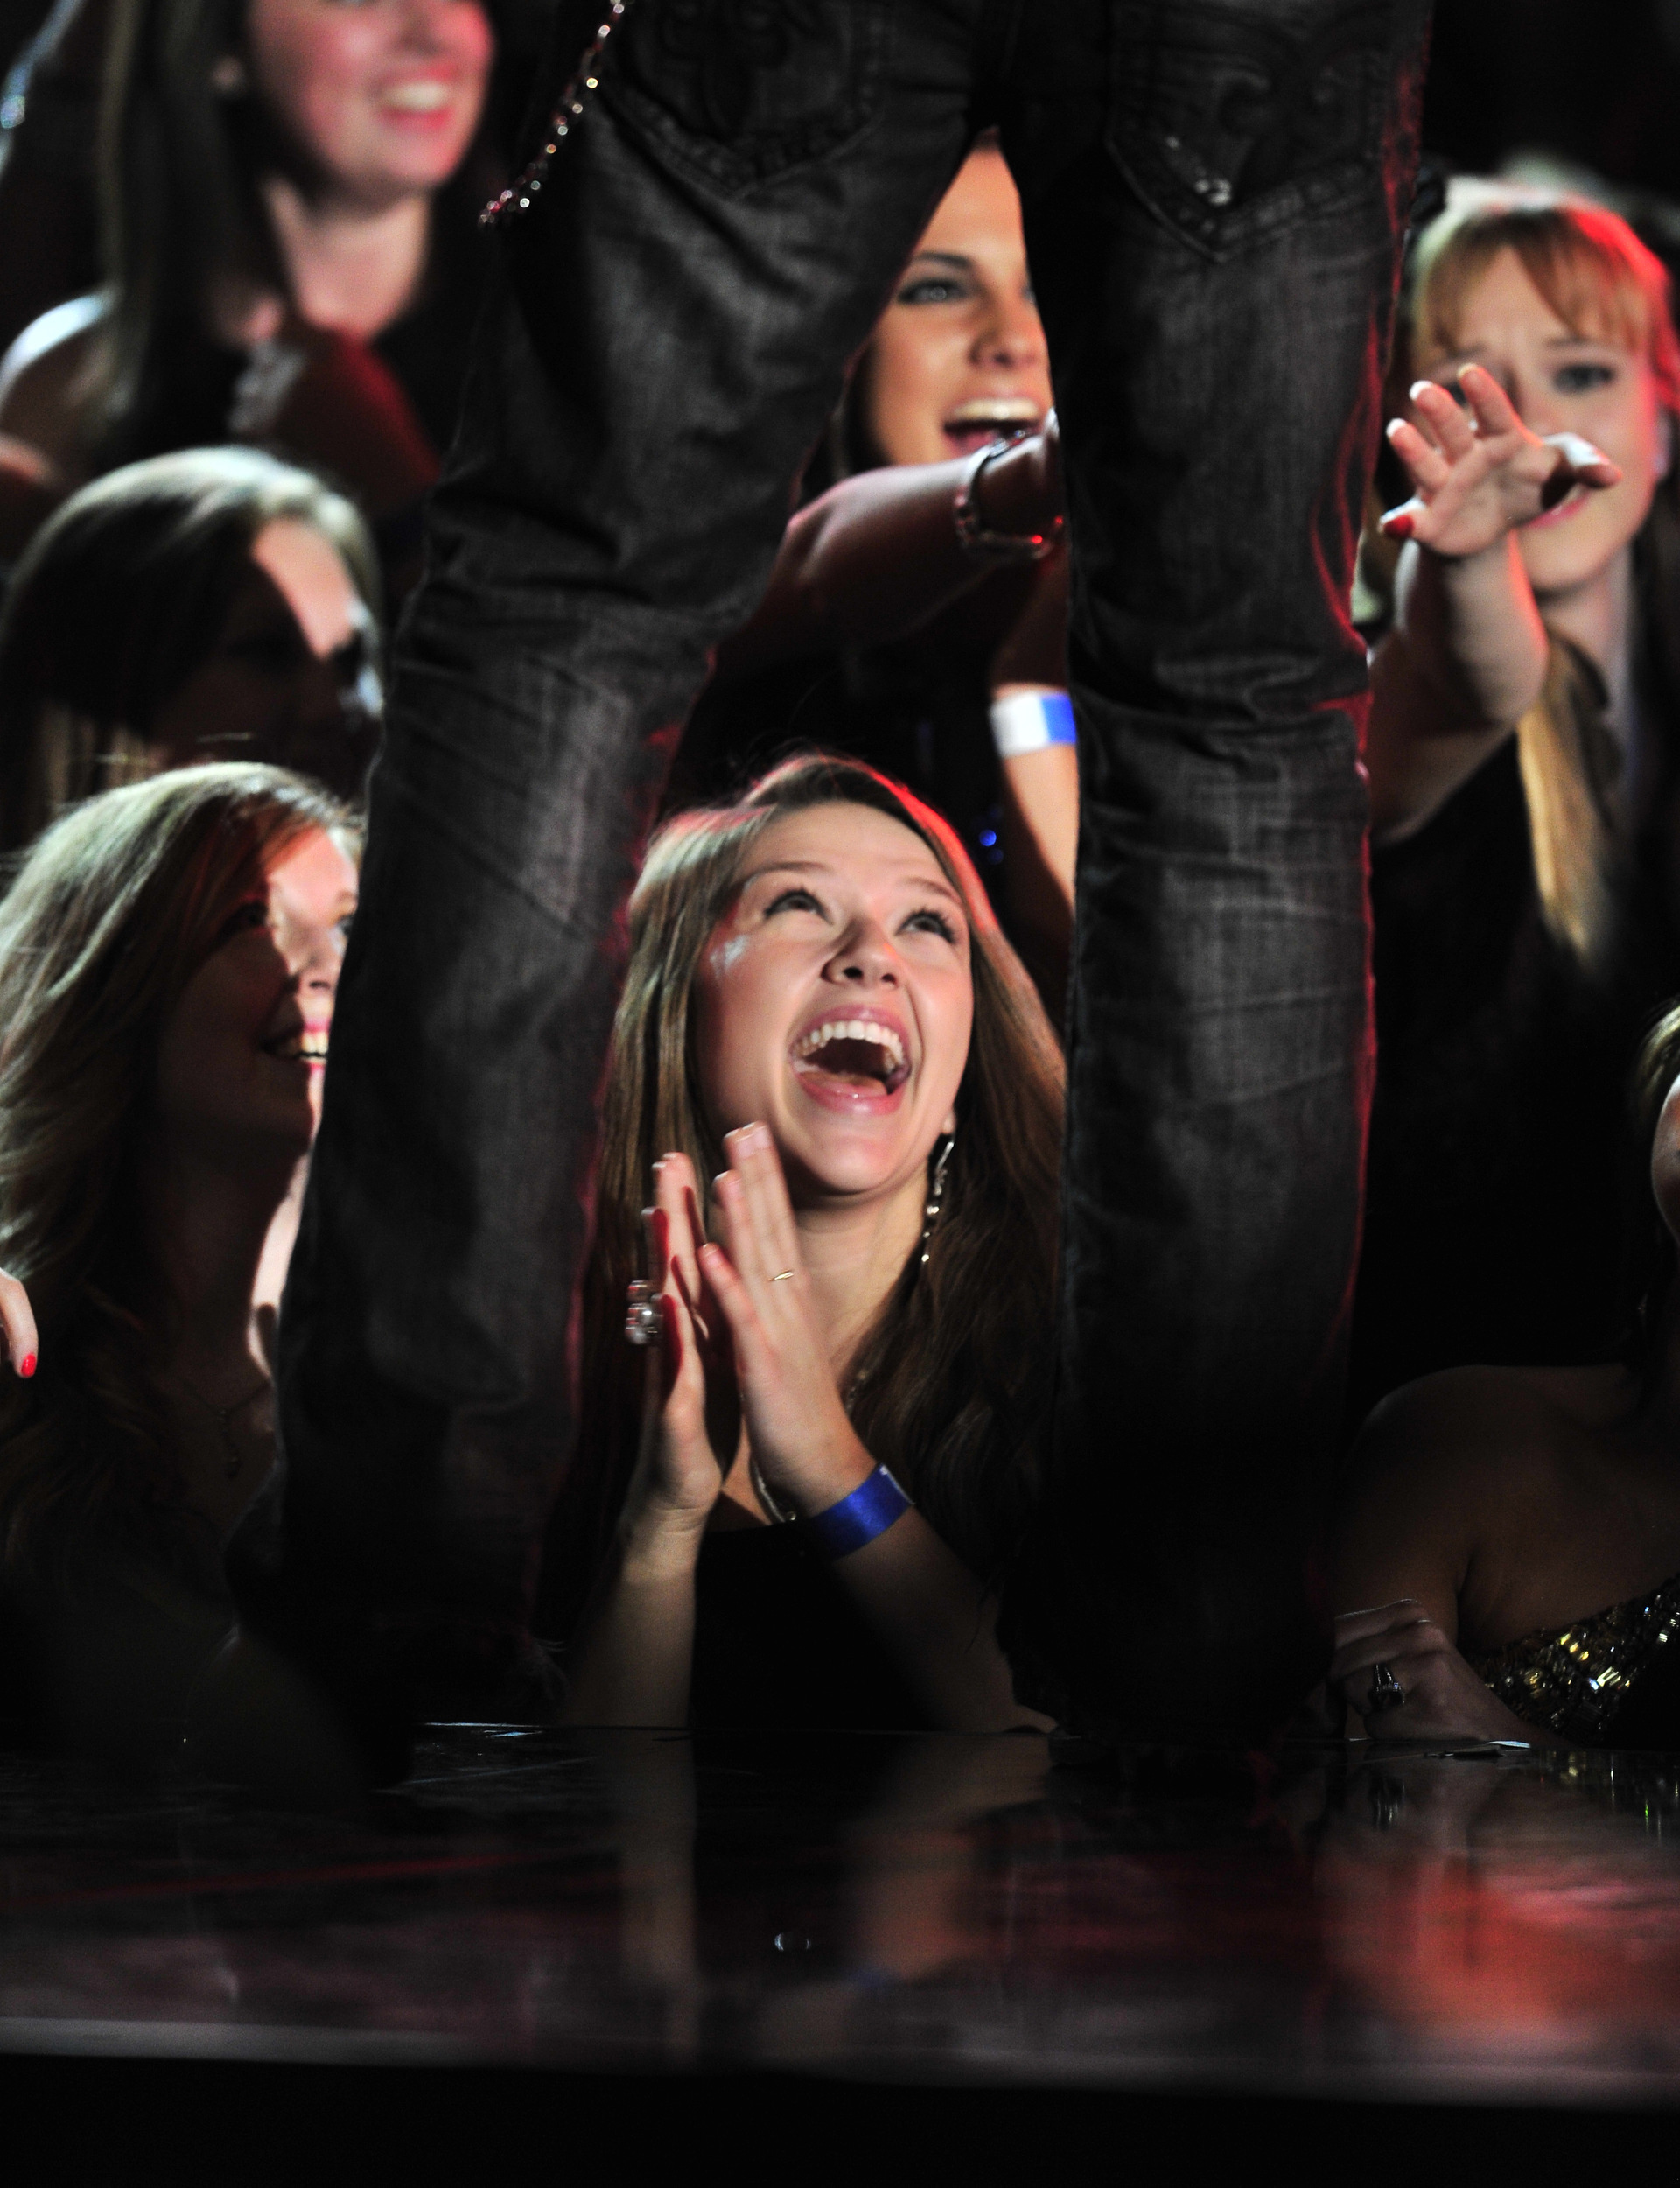  Fans react at the 46th Annual CMA Awards Thursday, Nov. 1, 2012 in Nashville, Tenn.  